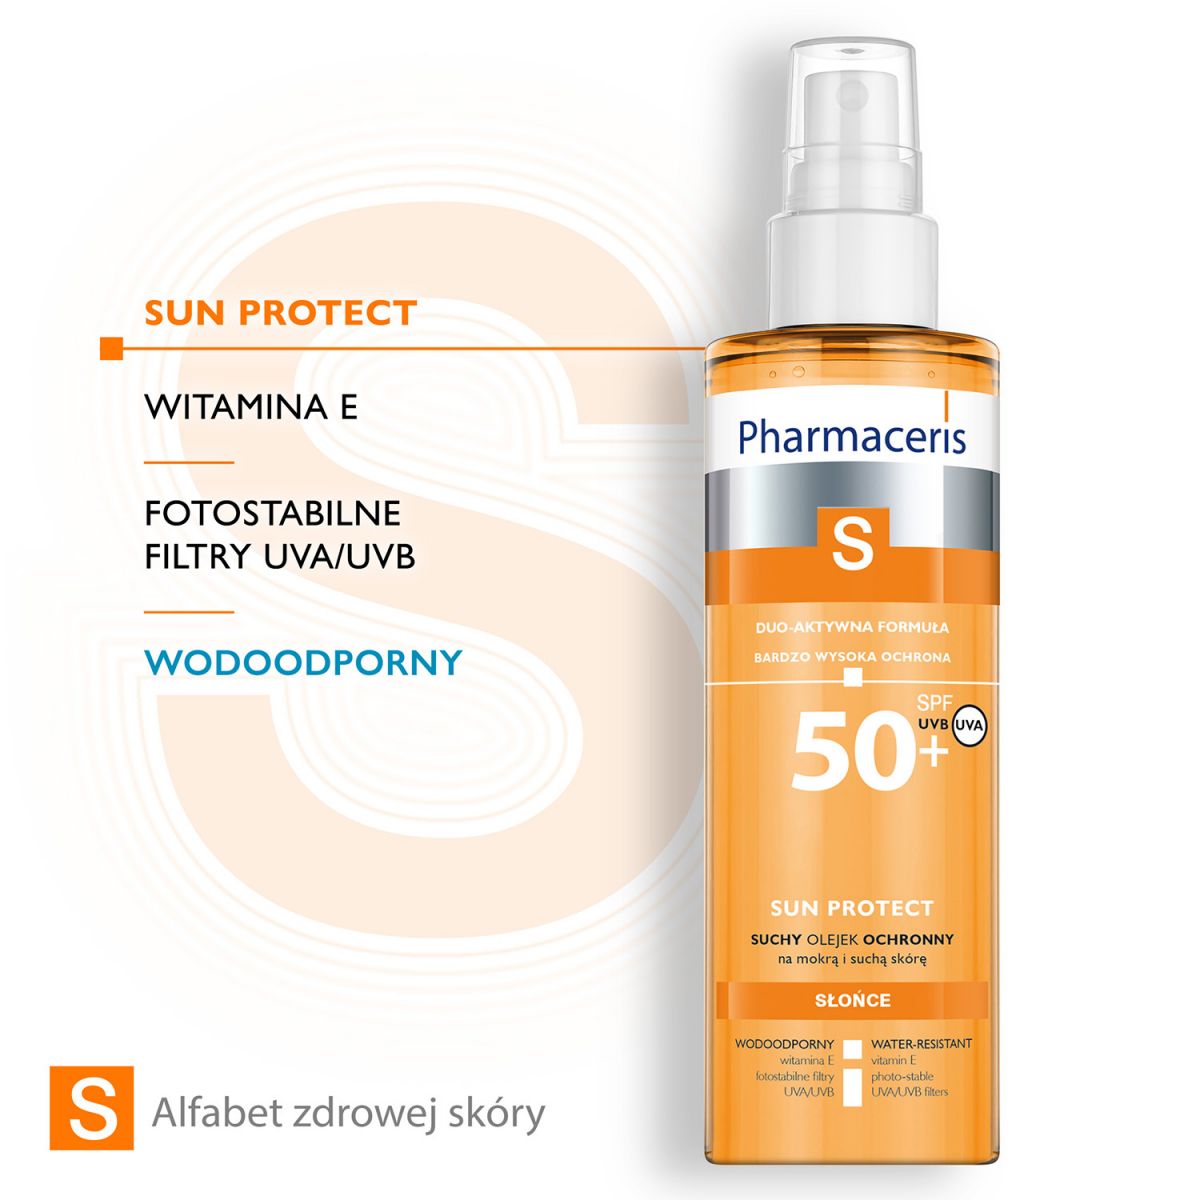 Pharmaceris S SUN PROTECT Suchy olejek do ciała  SPF 50+